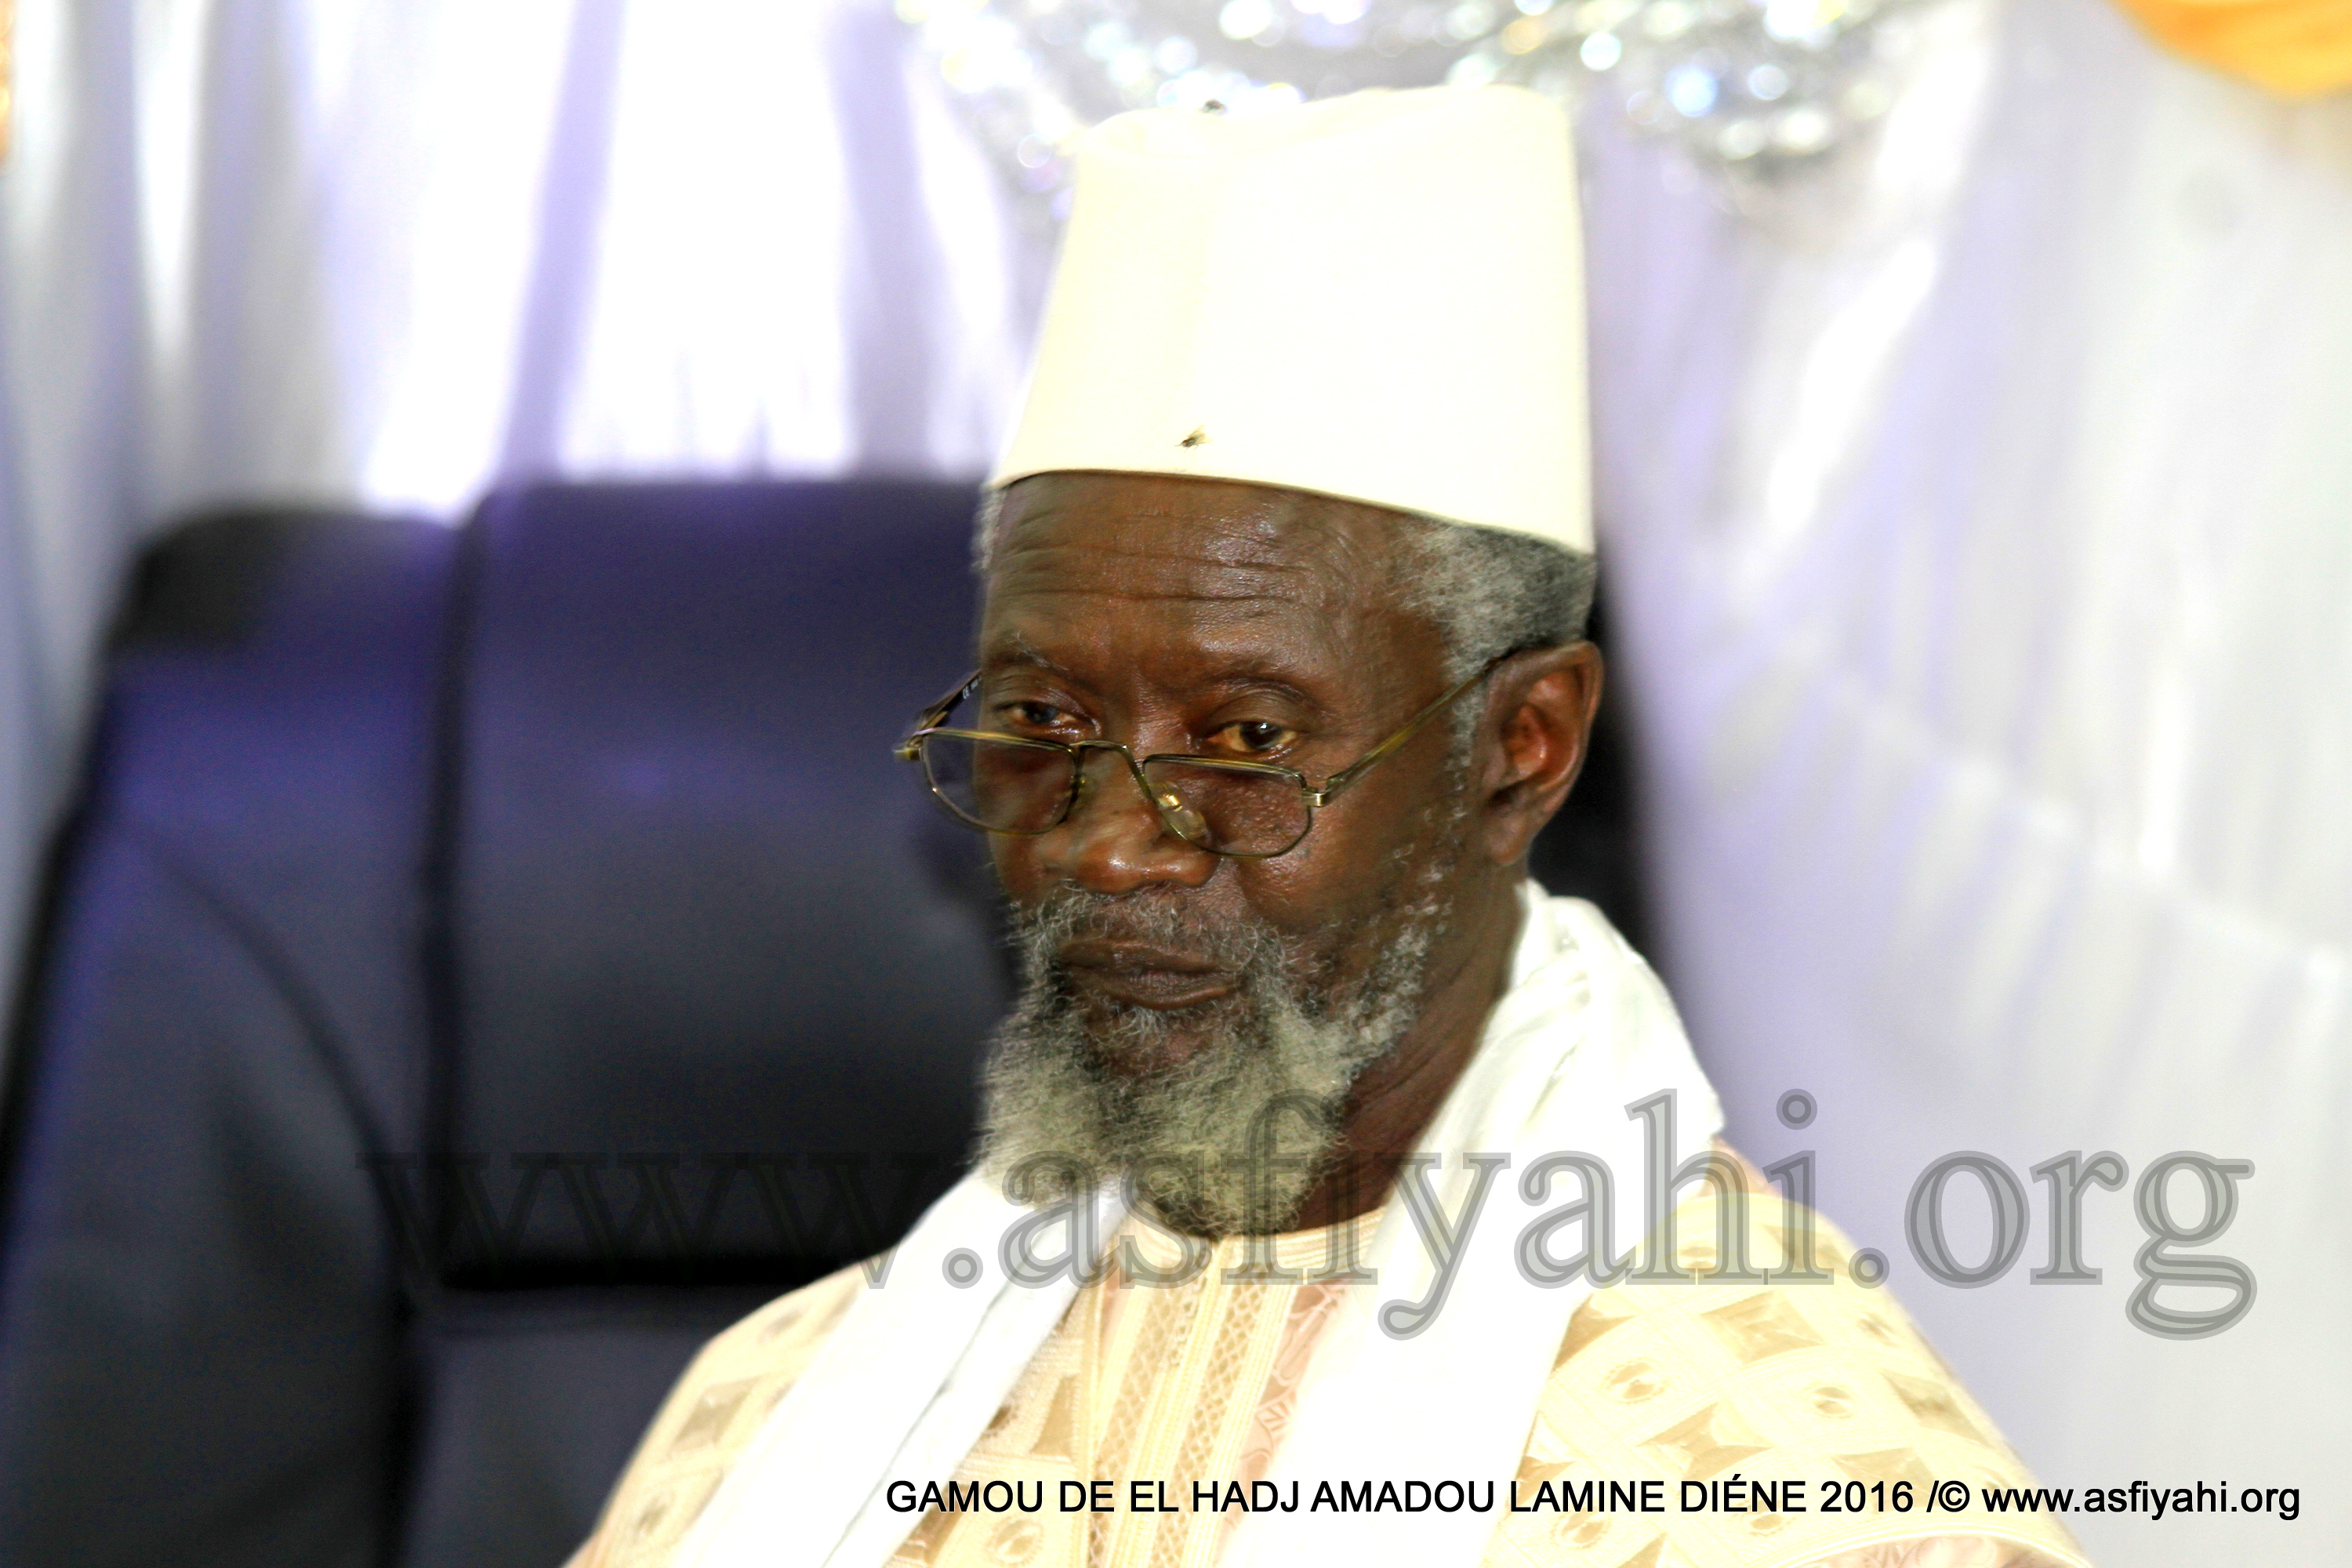 PHOTOS - Les Images du Gamou EL Hadj Amdou Lamine Diéne 2016, présidé par El Hadj Doudou Kend Mbaye 